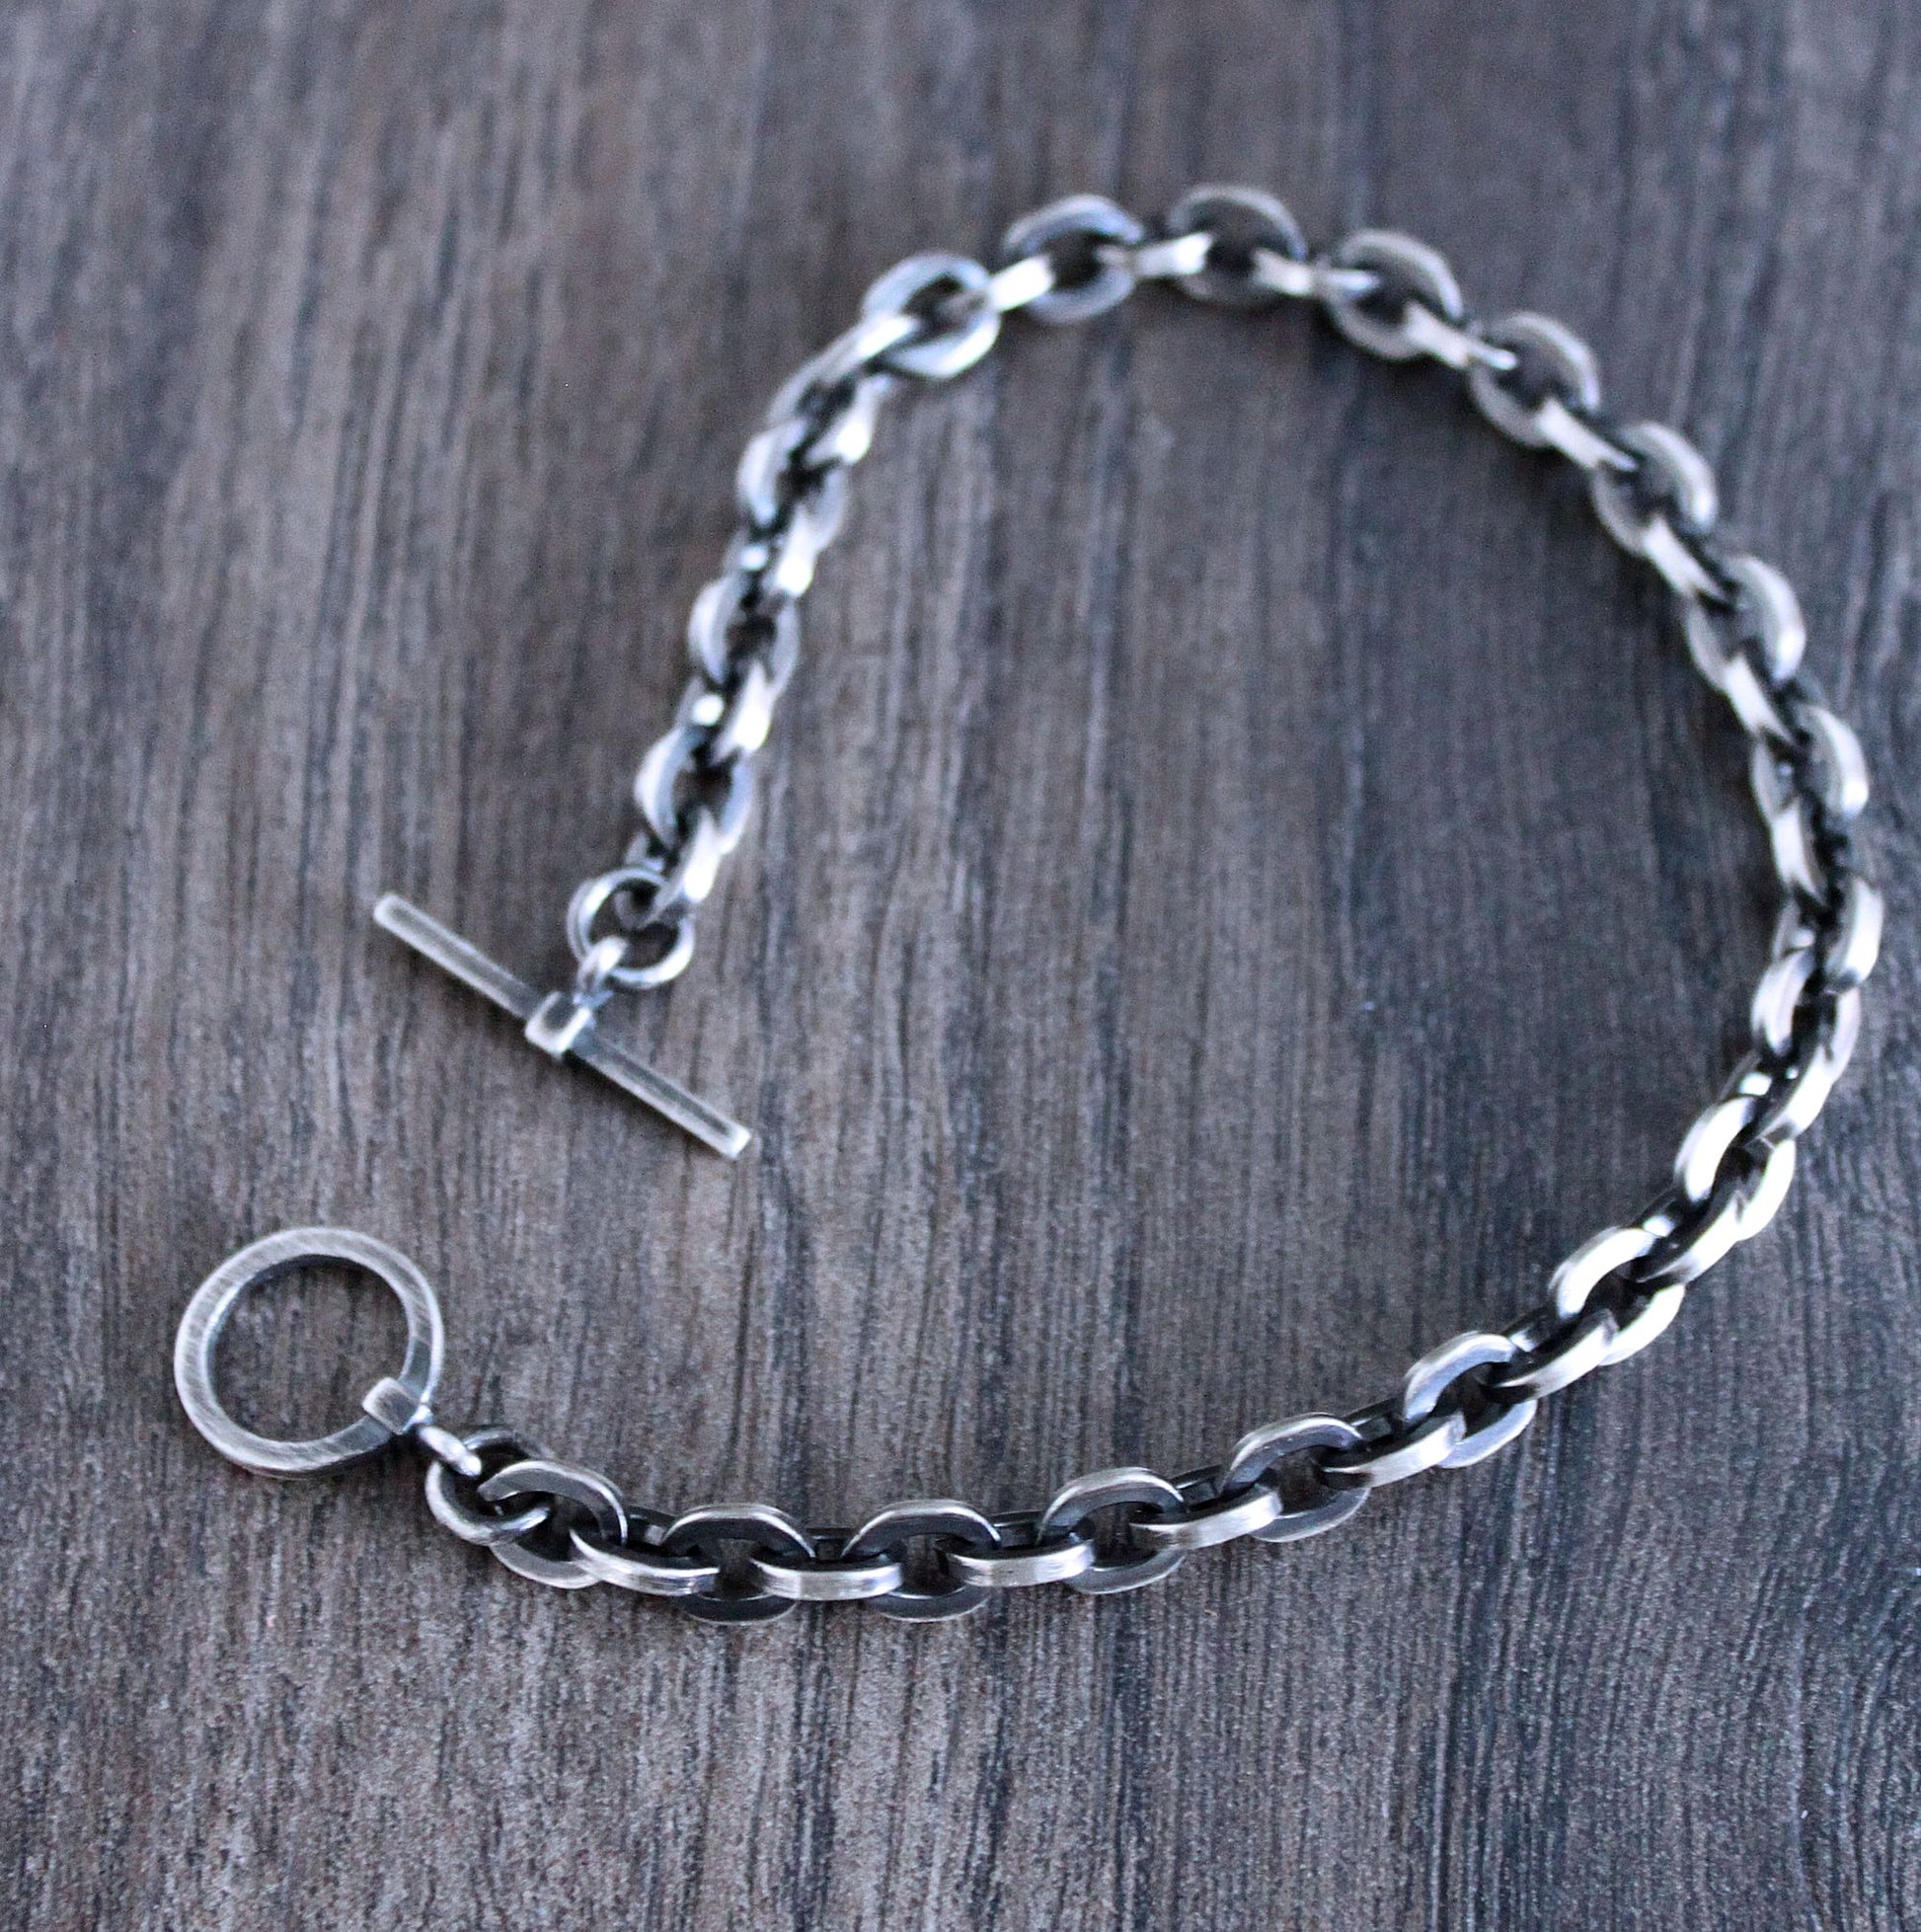 Men's Silver Square Wire Cable Chain Bracelet, Toggle Clasp 8 Inches